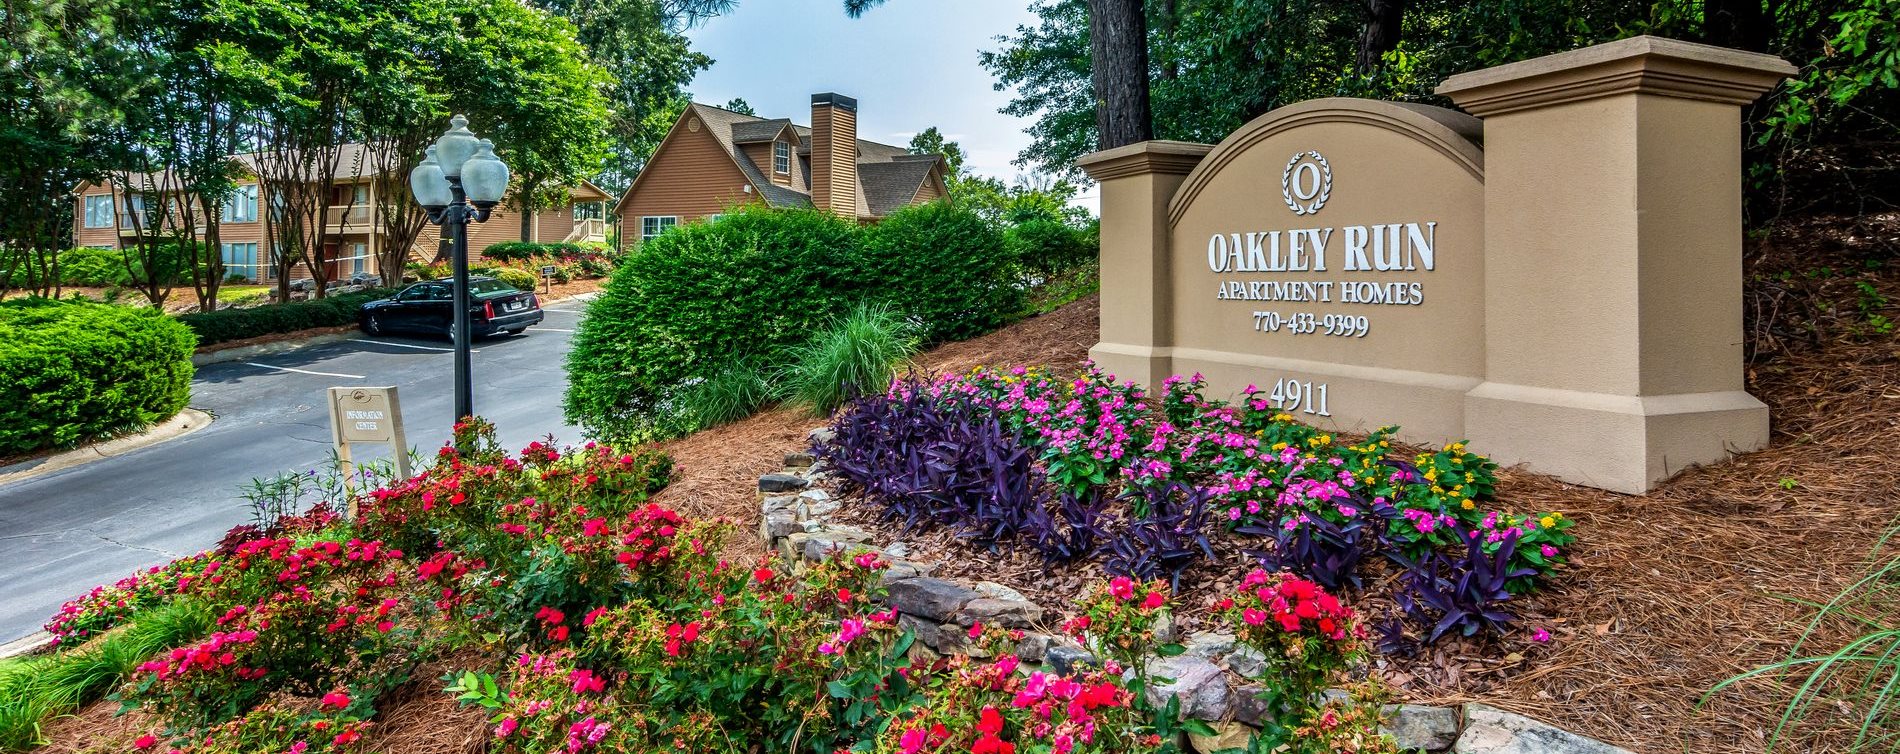 Login to Oakley Run Resident Services | Oakley Run